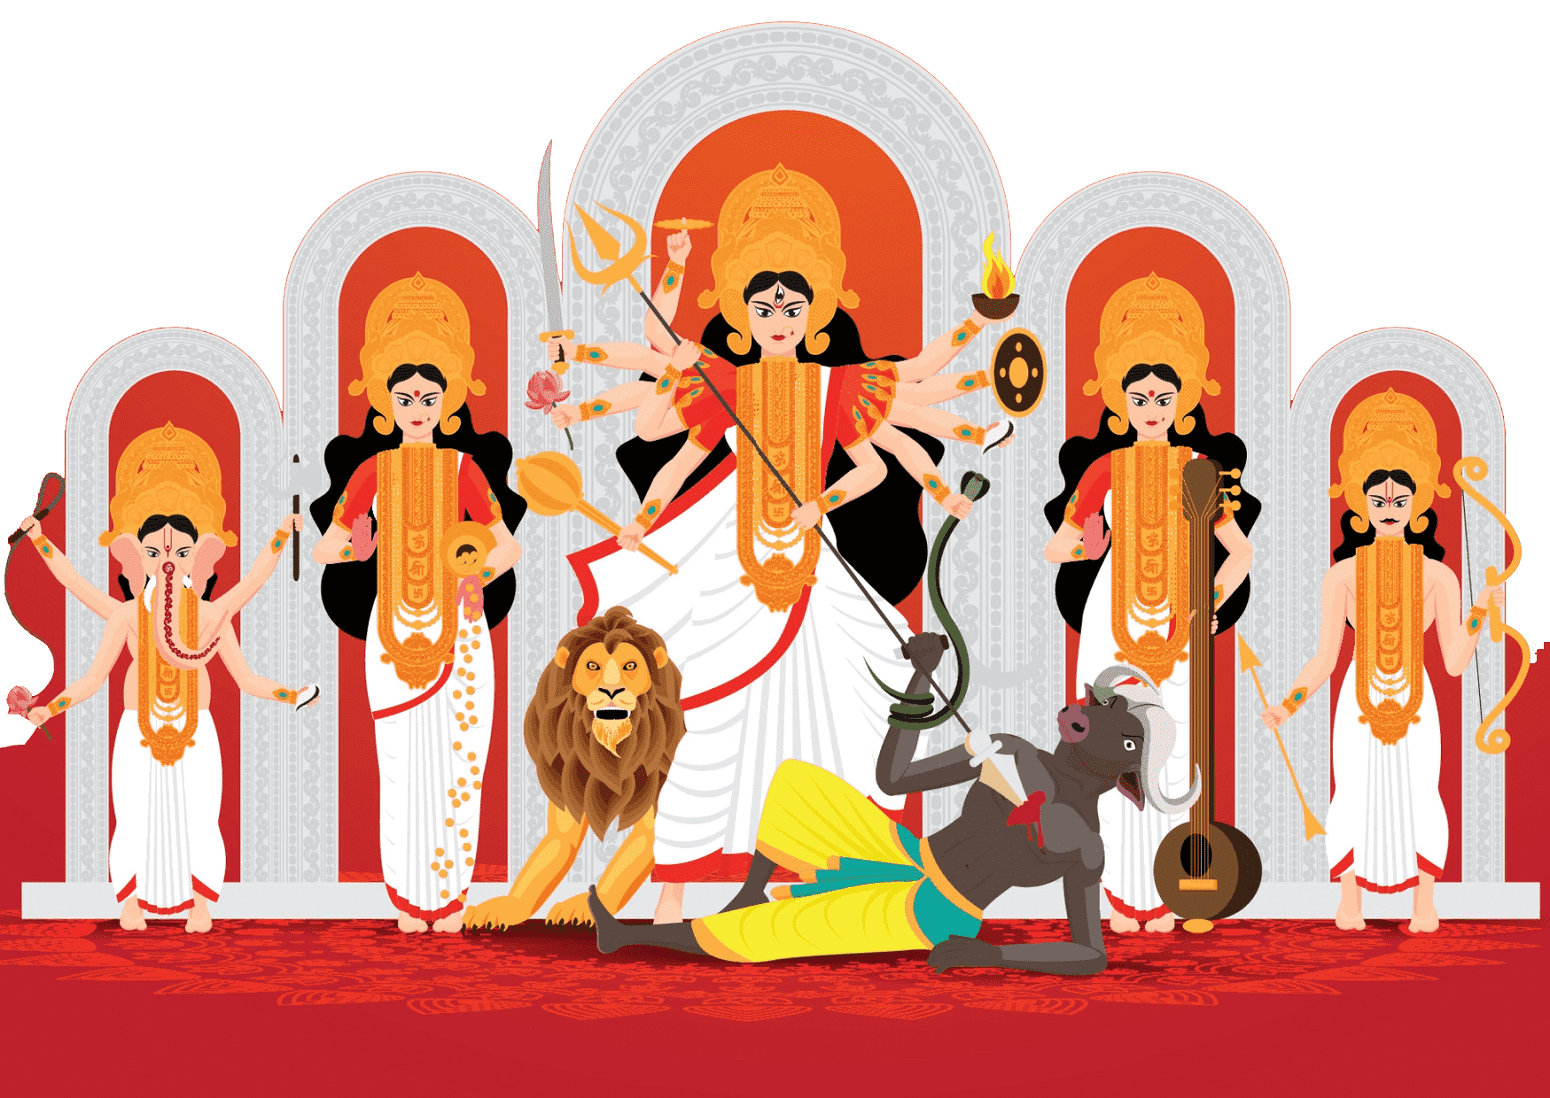 maa durga illustration with children ganesh, lakshmi, saraswati and kartik